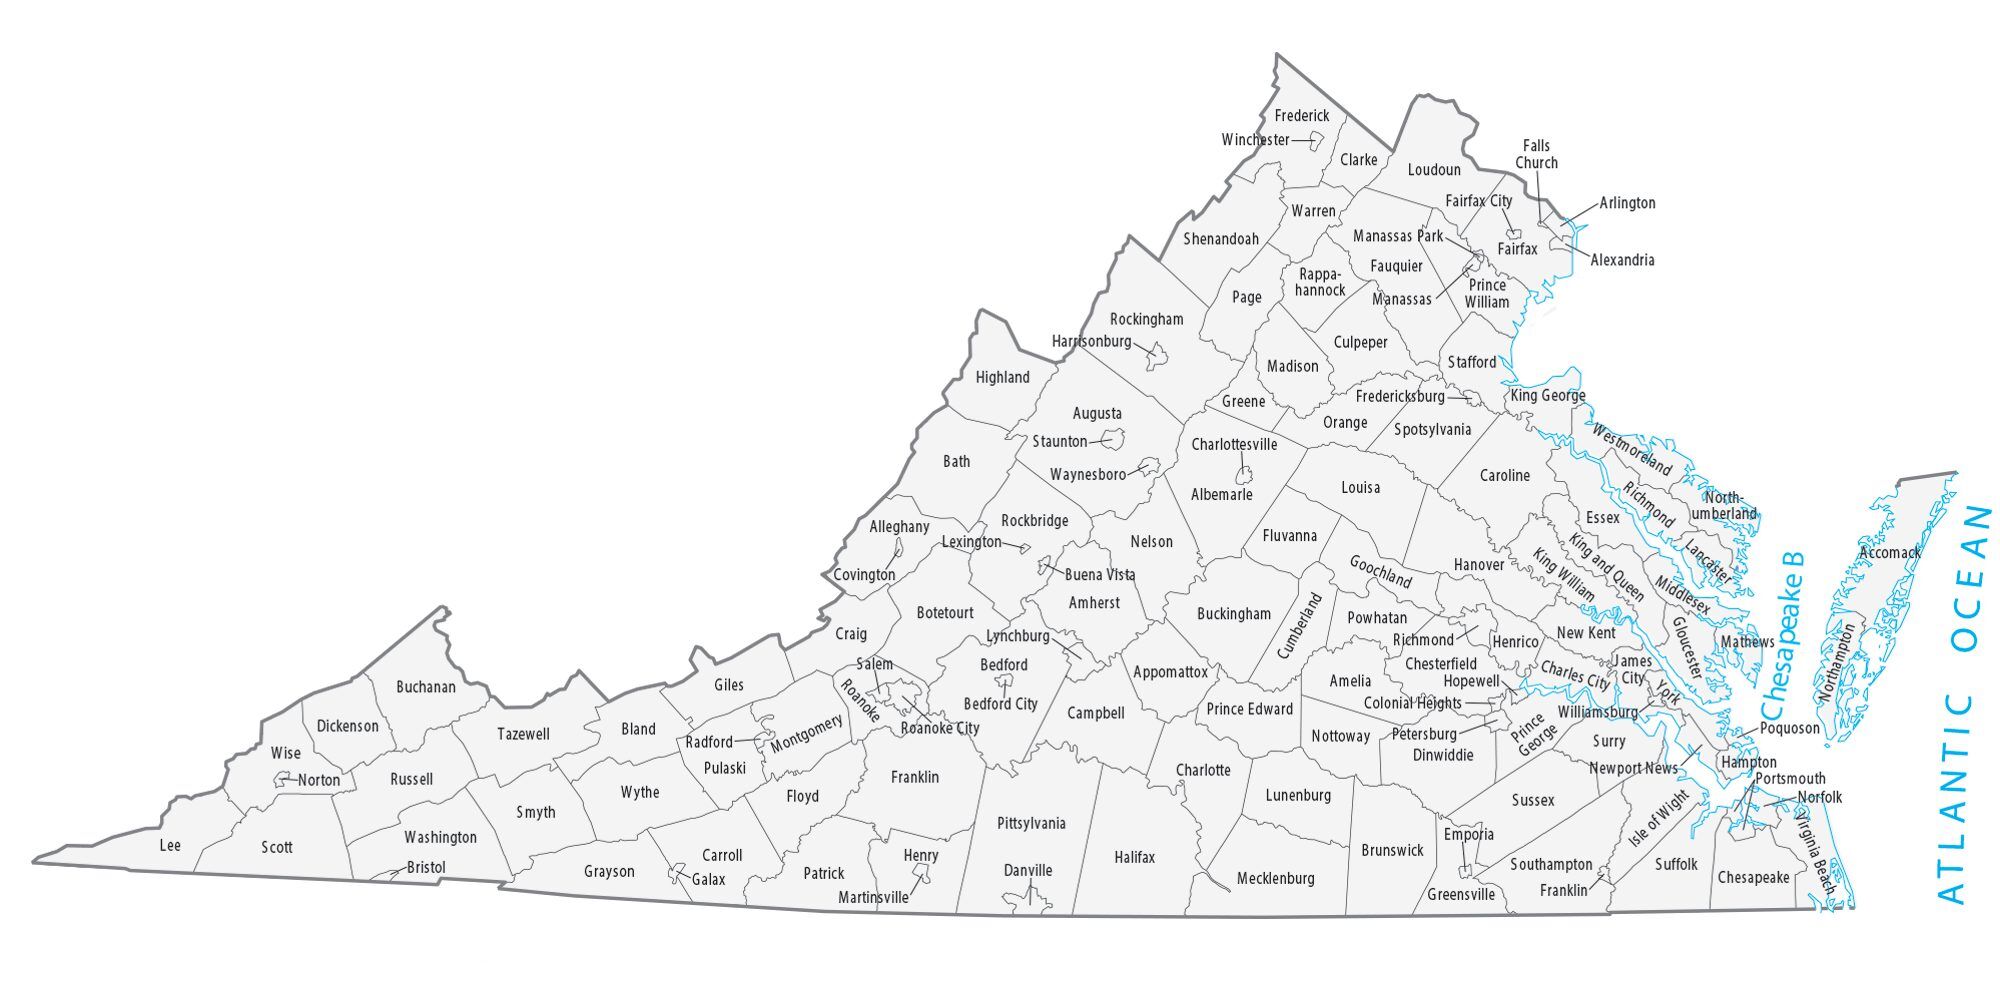 Virginia County Map Counties in Virginia (VA) VA Counties